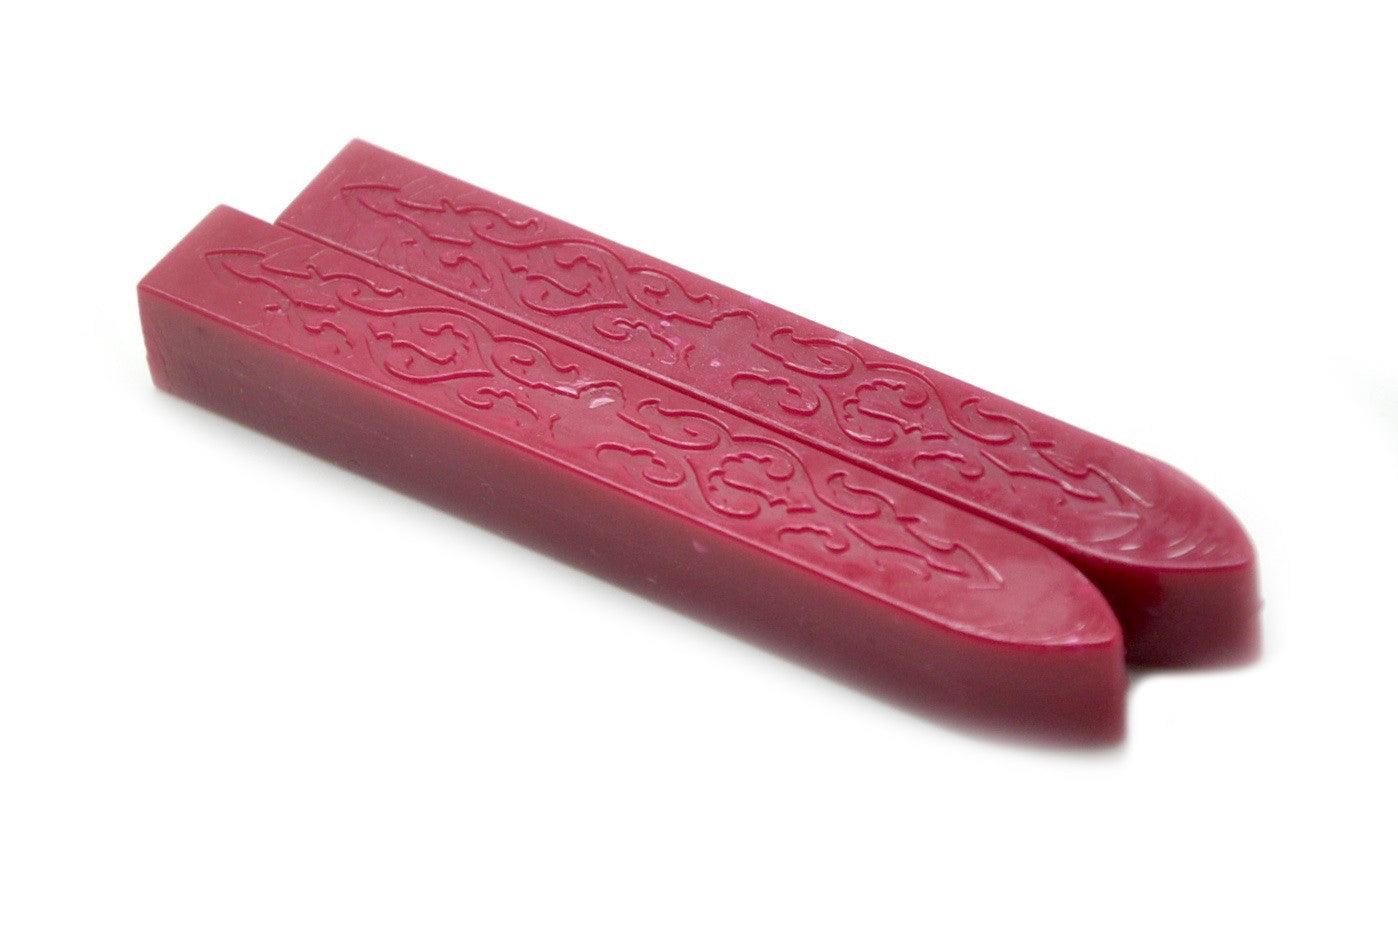 Burgundy Non-Wick Fleur Sealing Wax Sticks for Wax Seal